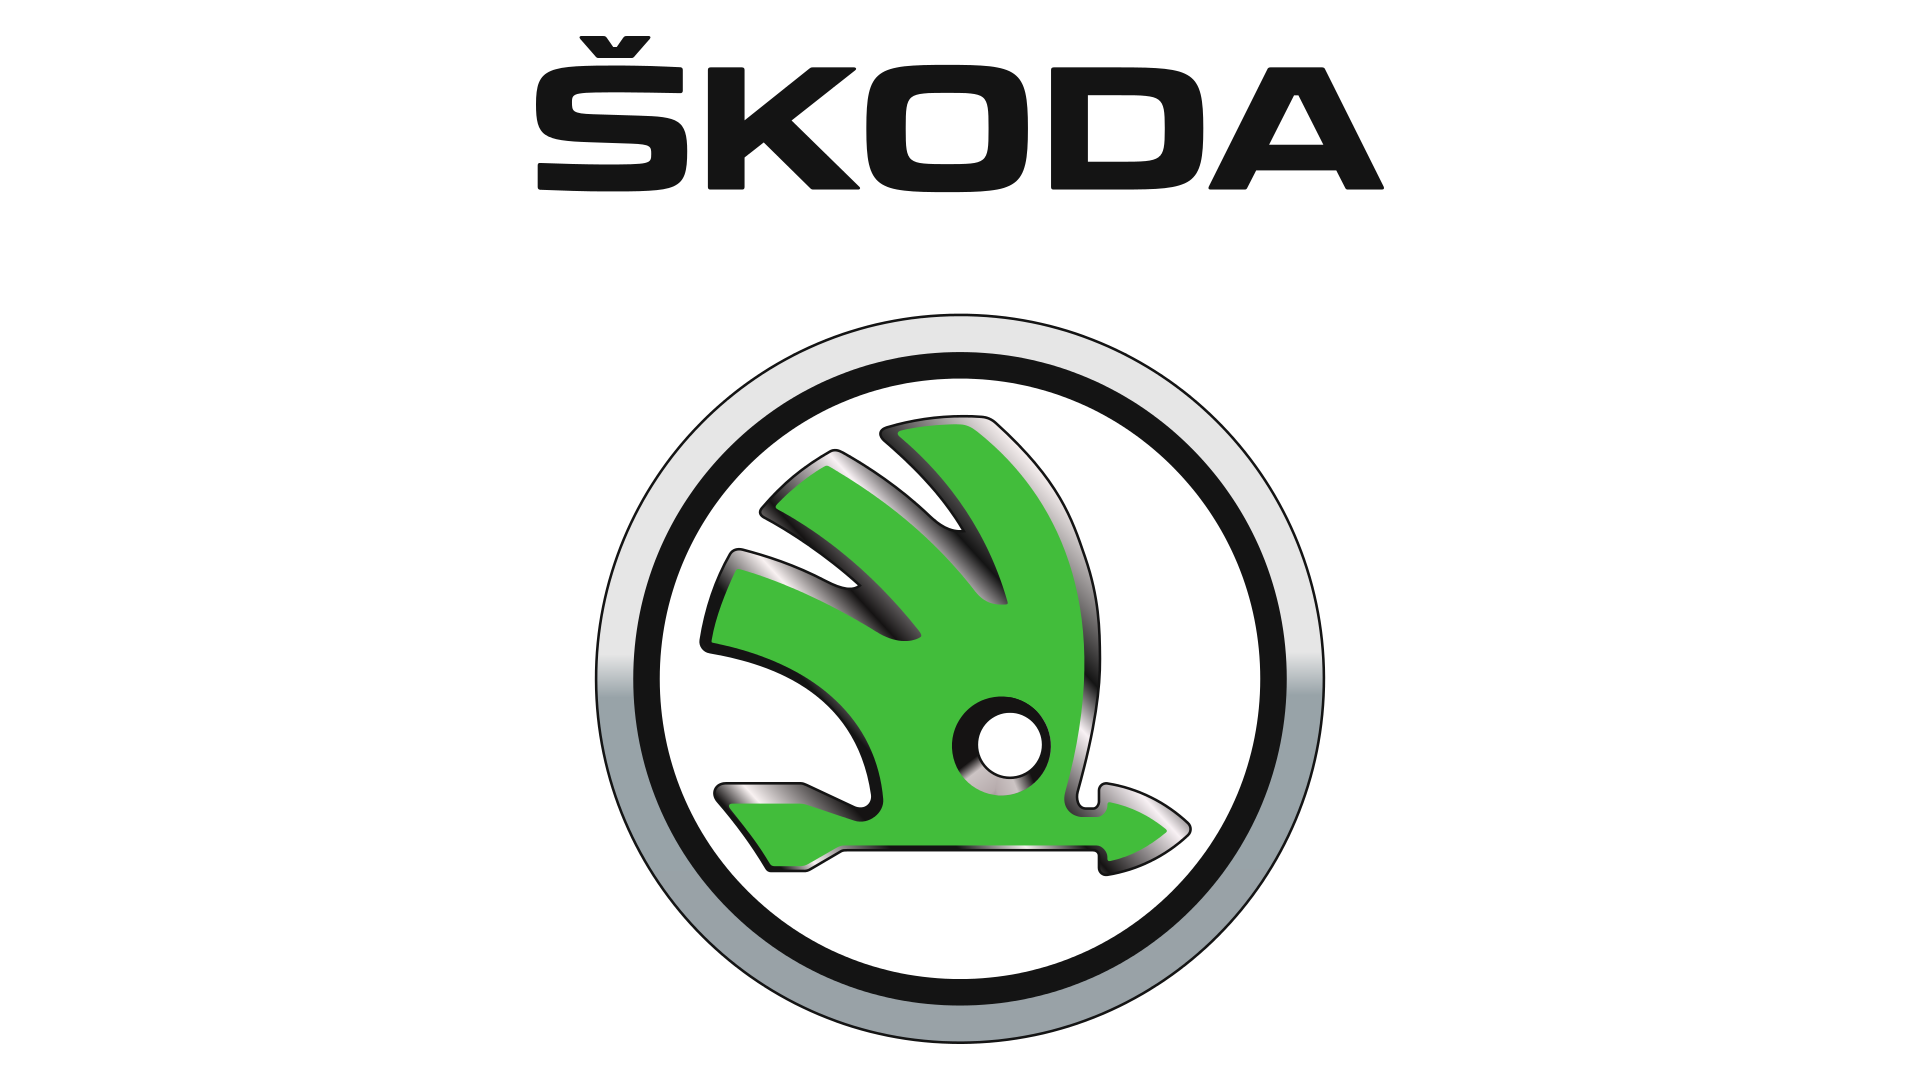 New Skoda Superb 2016 launche